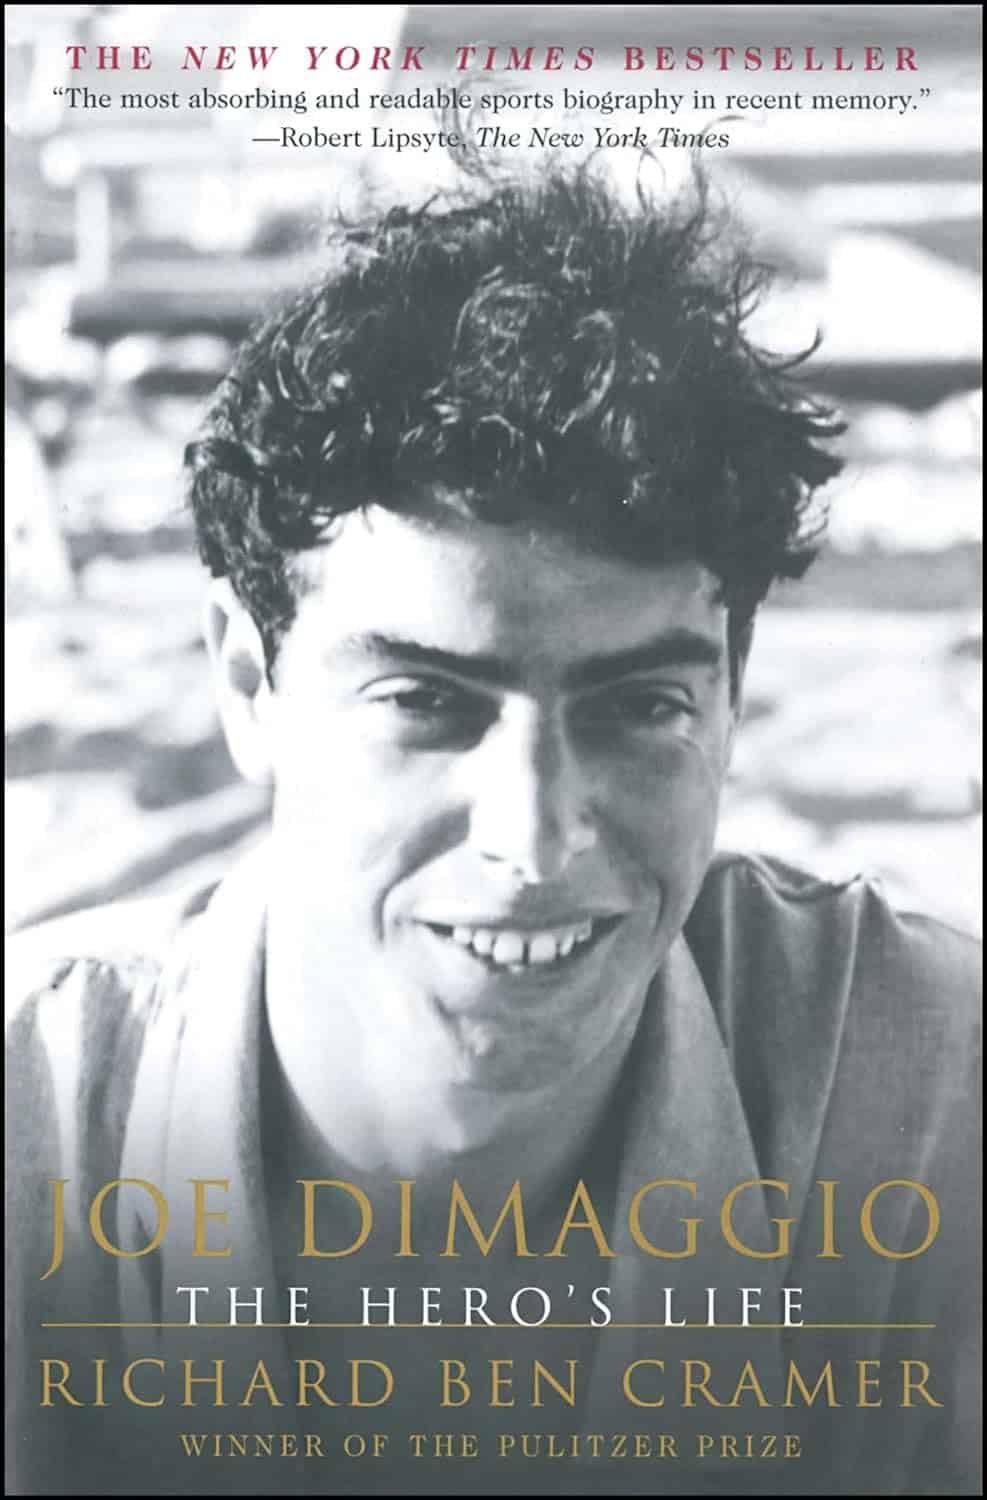 Joe DiMaggio The Hero's Life, by Richard Ben Cramer